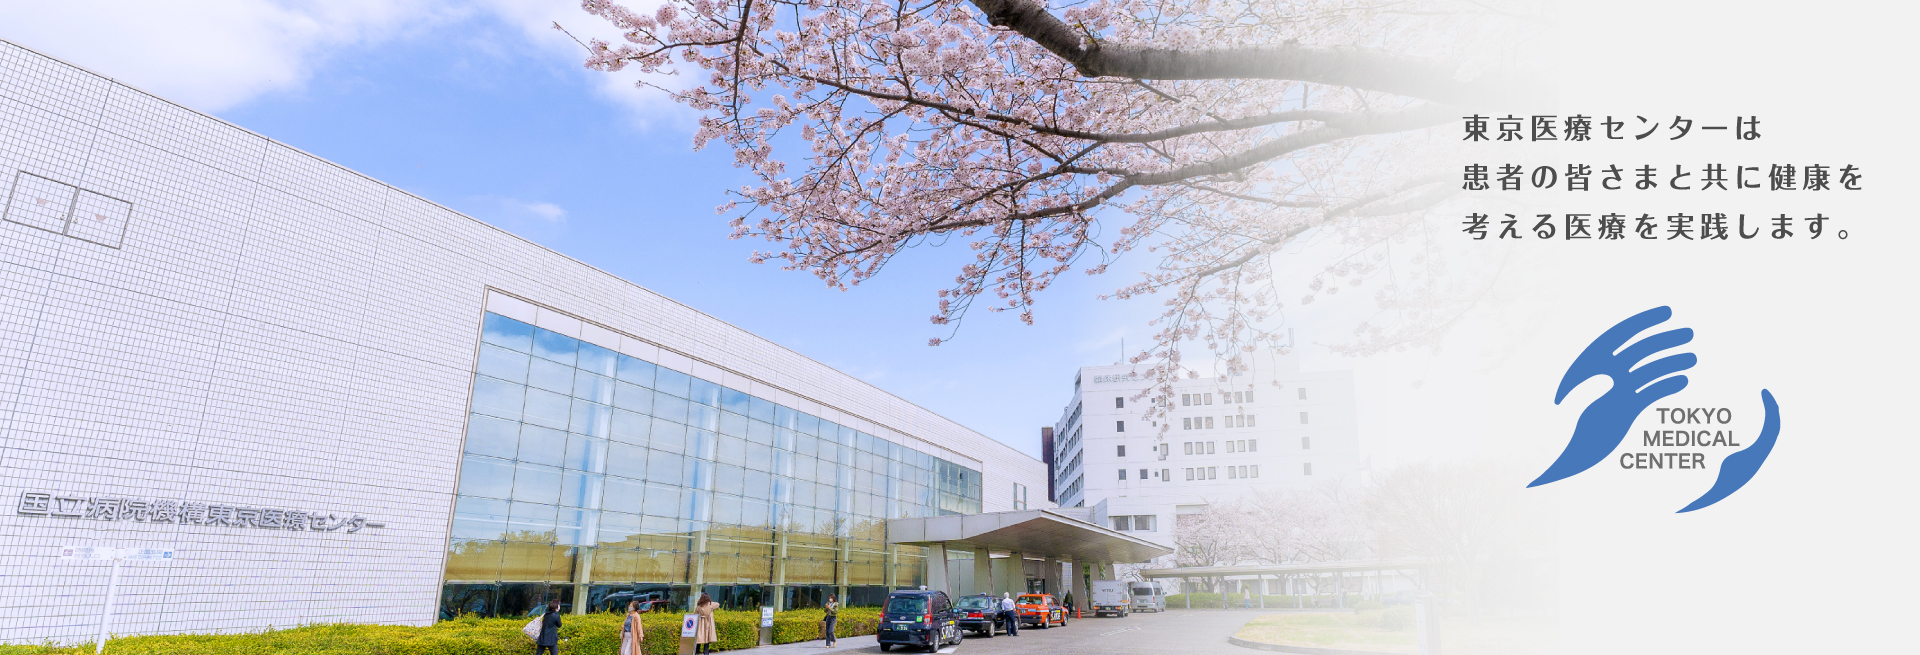 独立行政法人国立病院機構東京医療センター